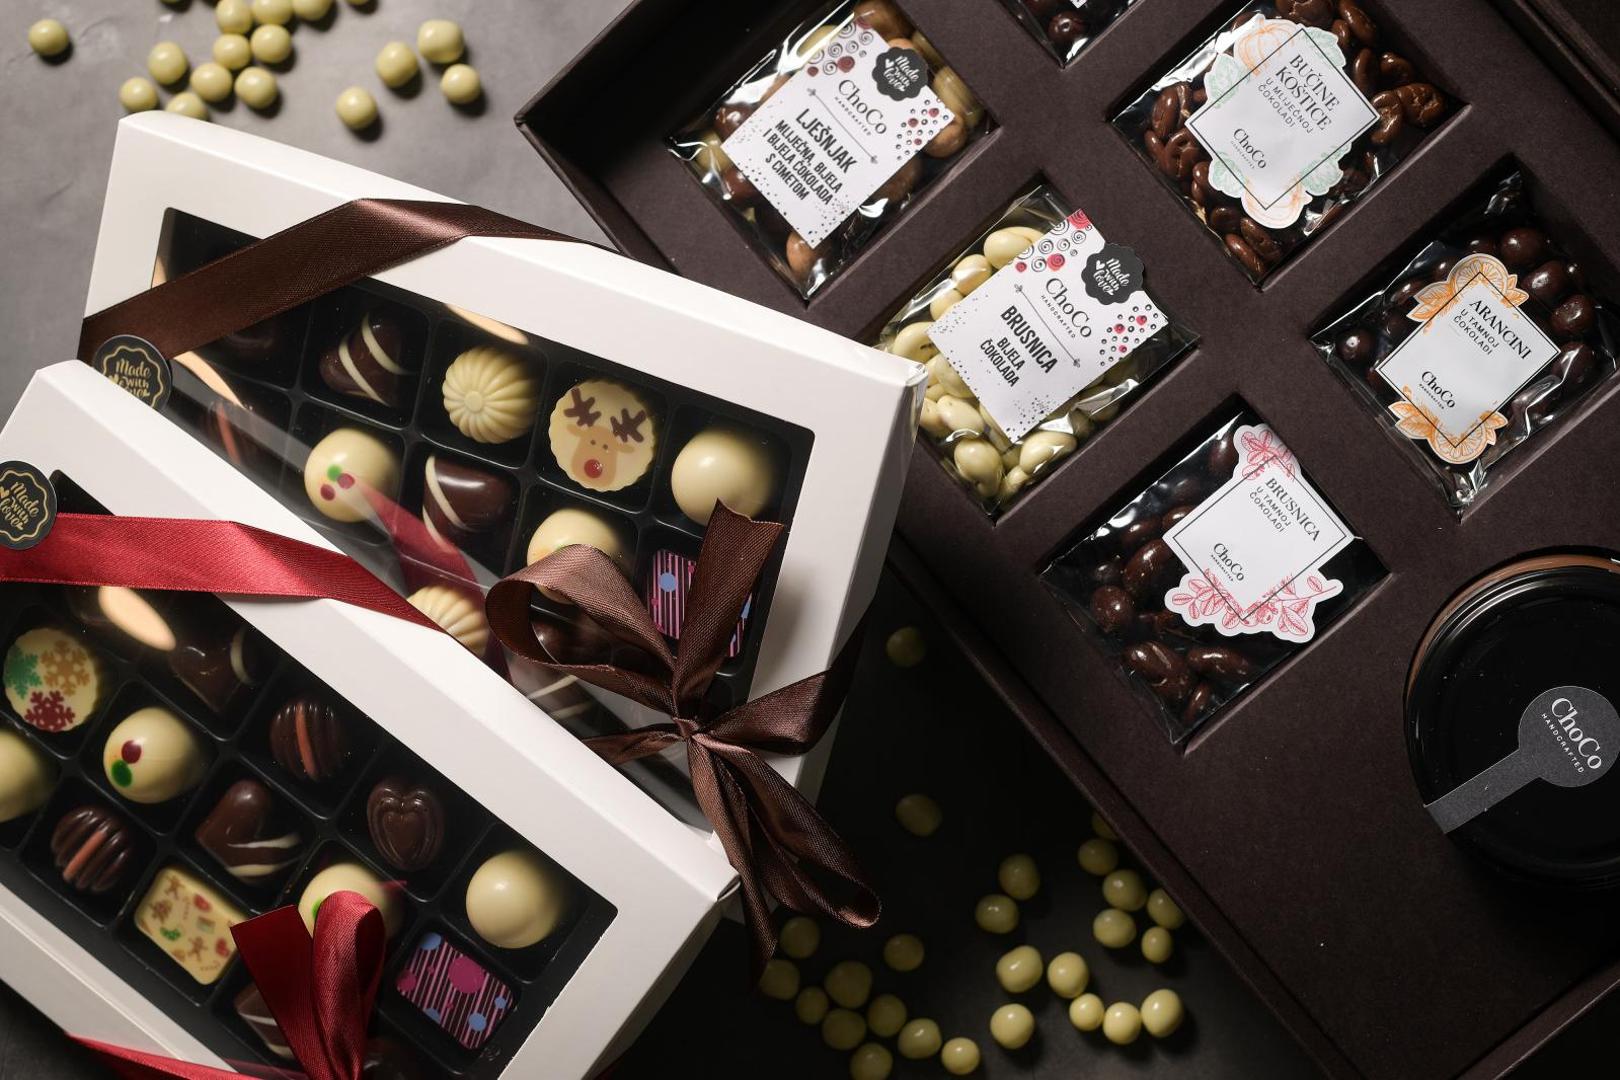 19.12.2020., Zagreb - Dragutin i Marcela Markovic Halkic pokrenuli su brand ChoCo cokoladnih proizvoda. 
Photo: Sandra Simunovic/PIXSELL